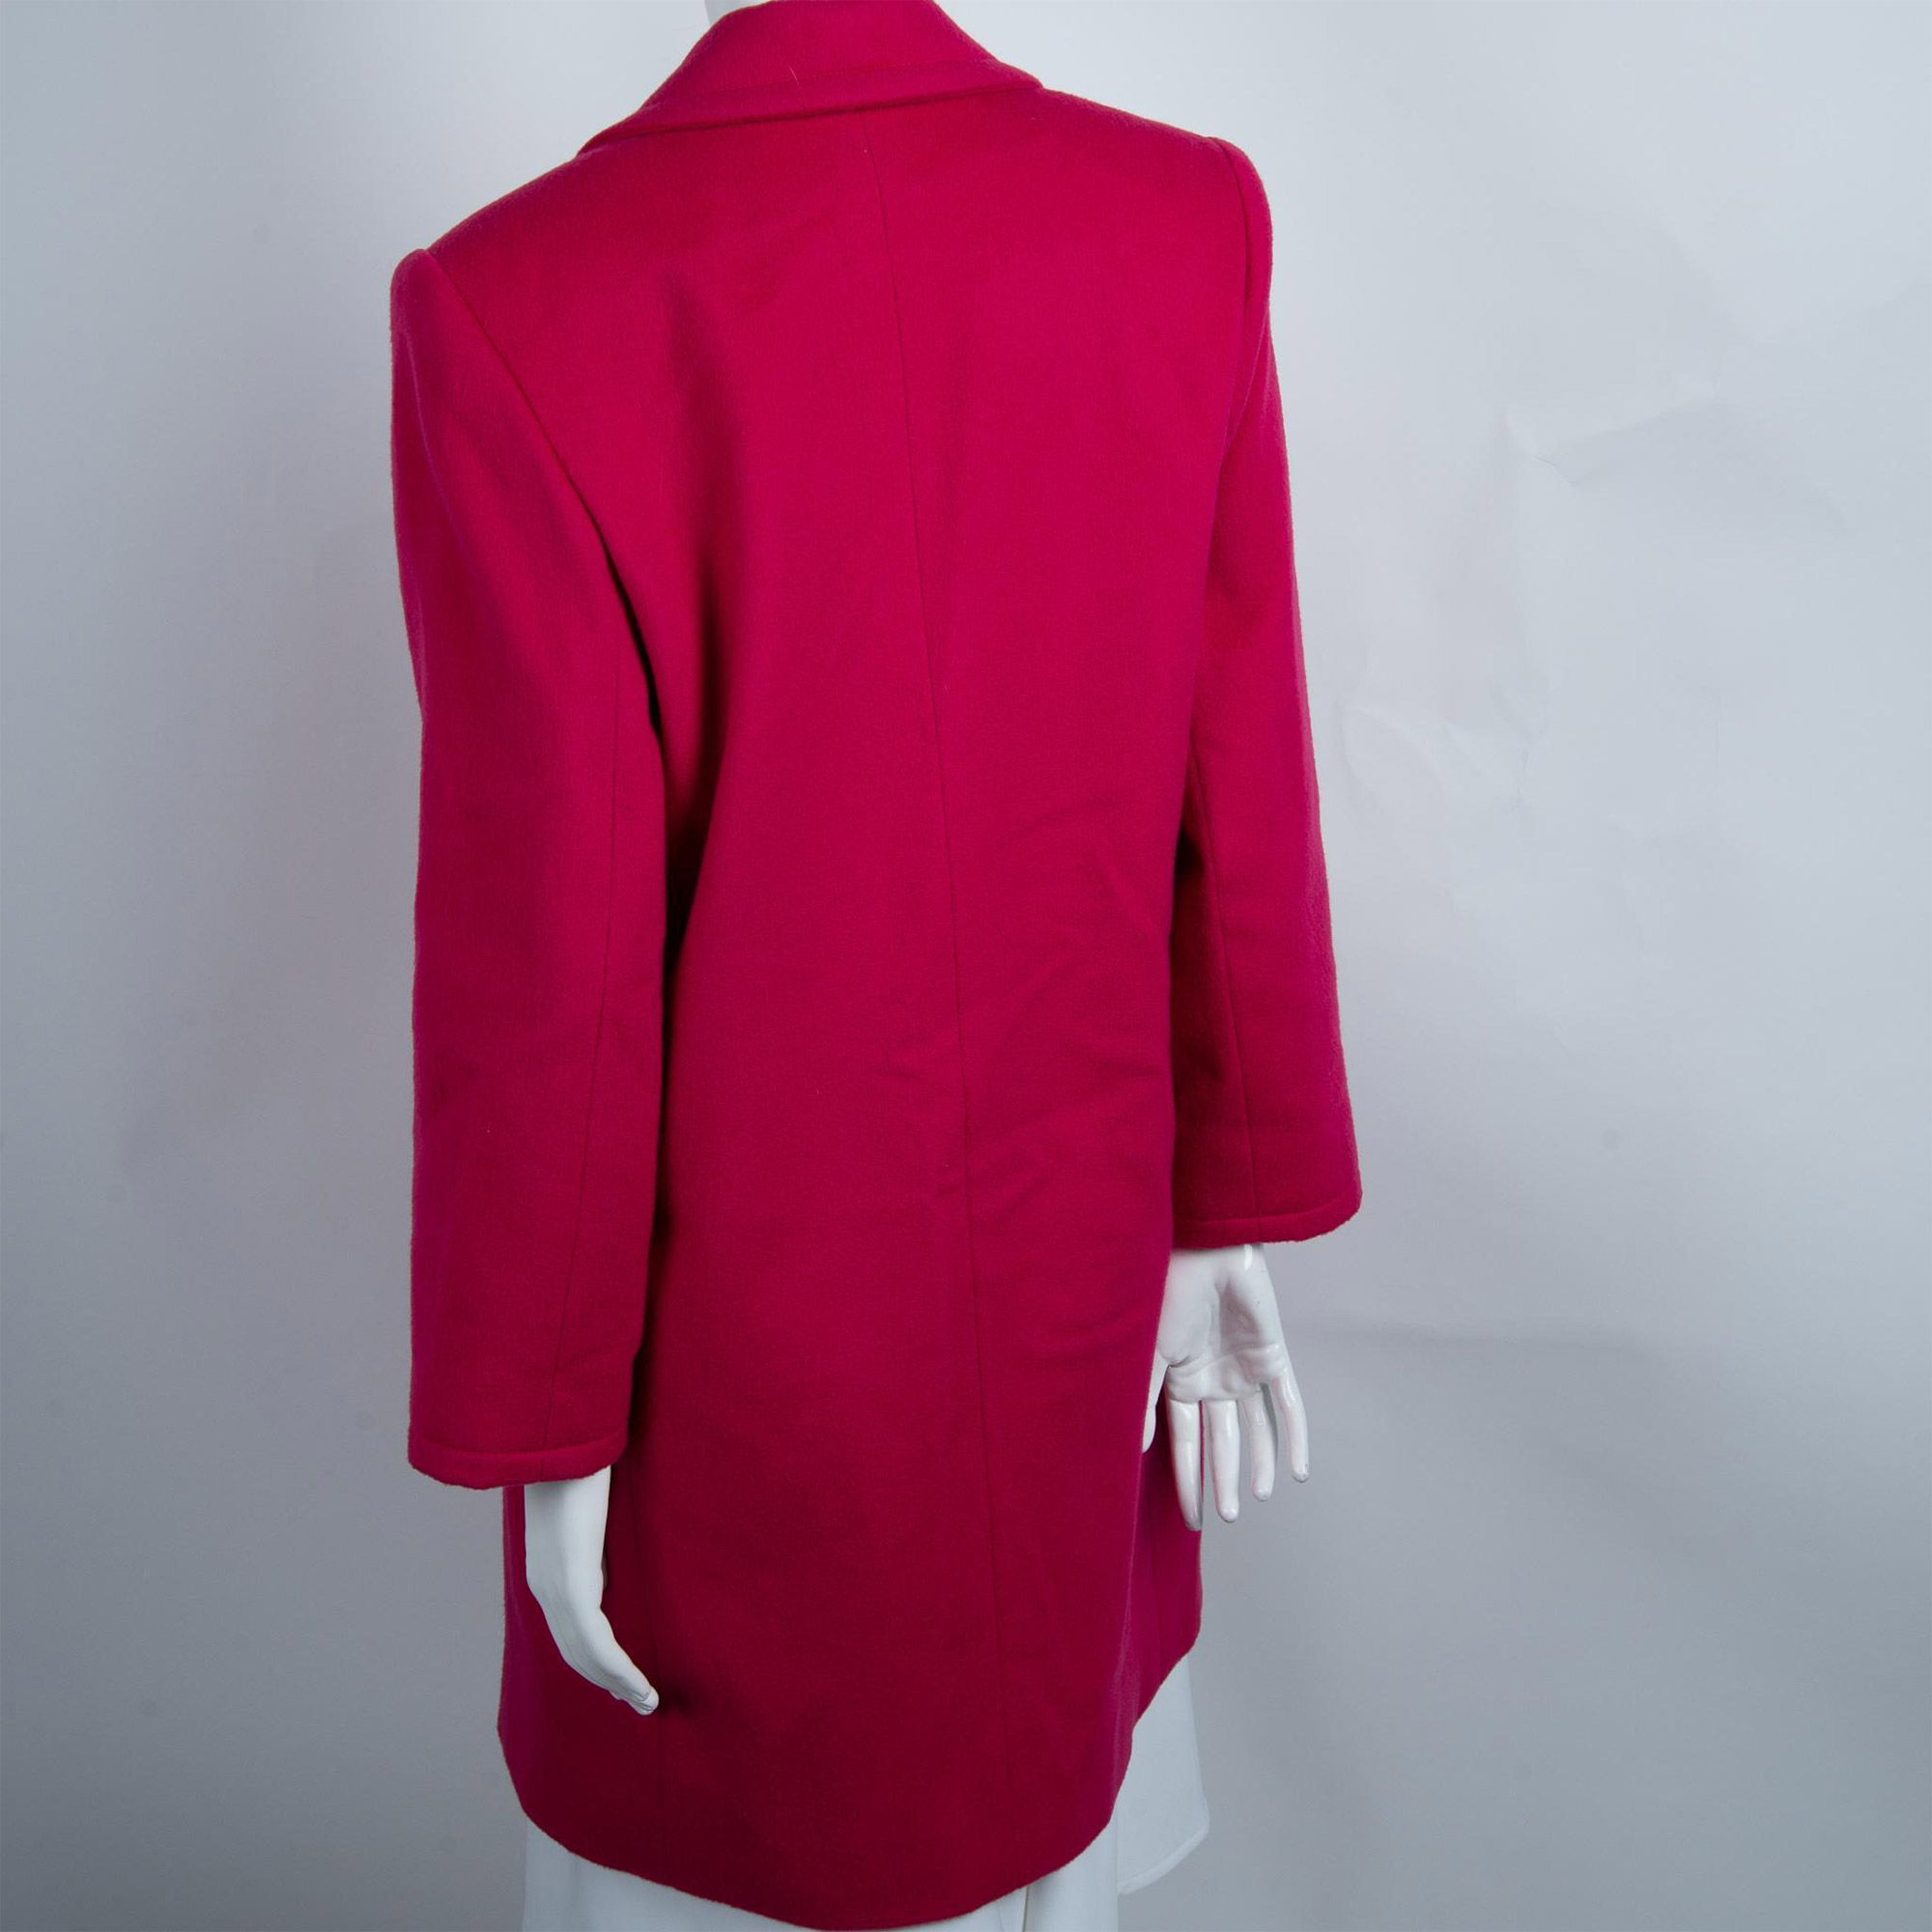 Vintage Givenchy Lambswool Fuchsia Coat, Size 6/36 - Image 6 of 7